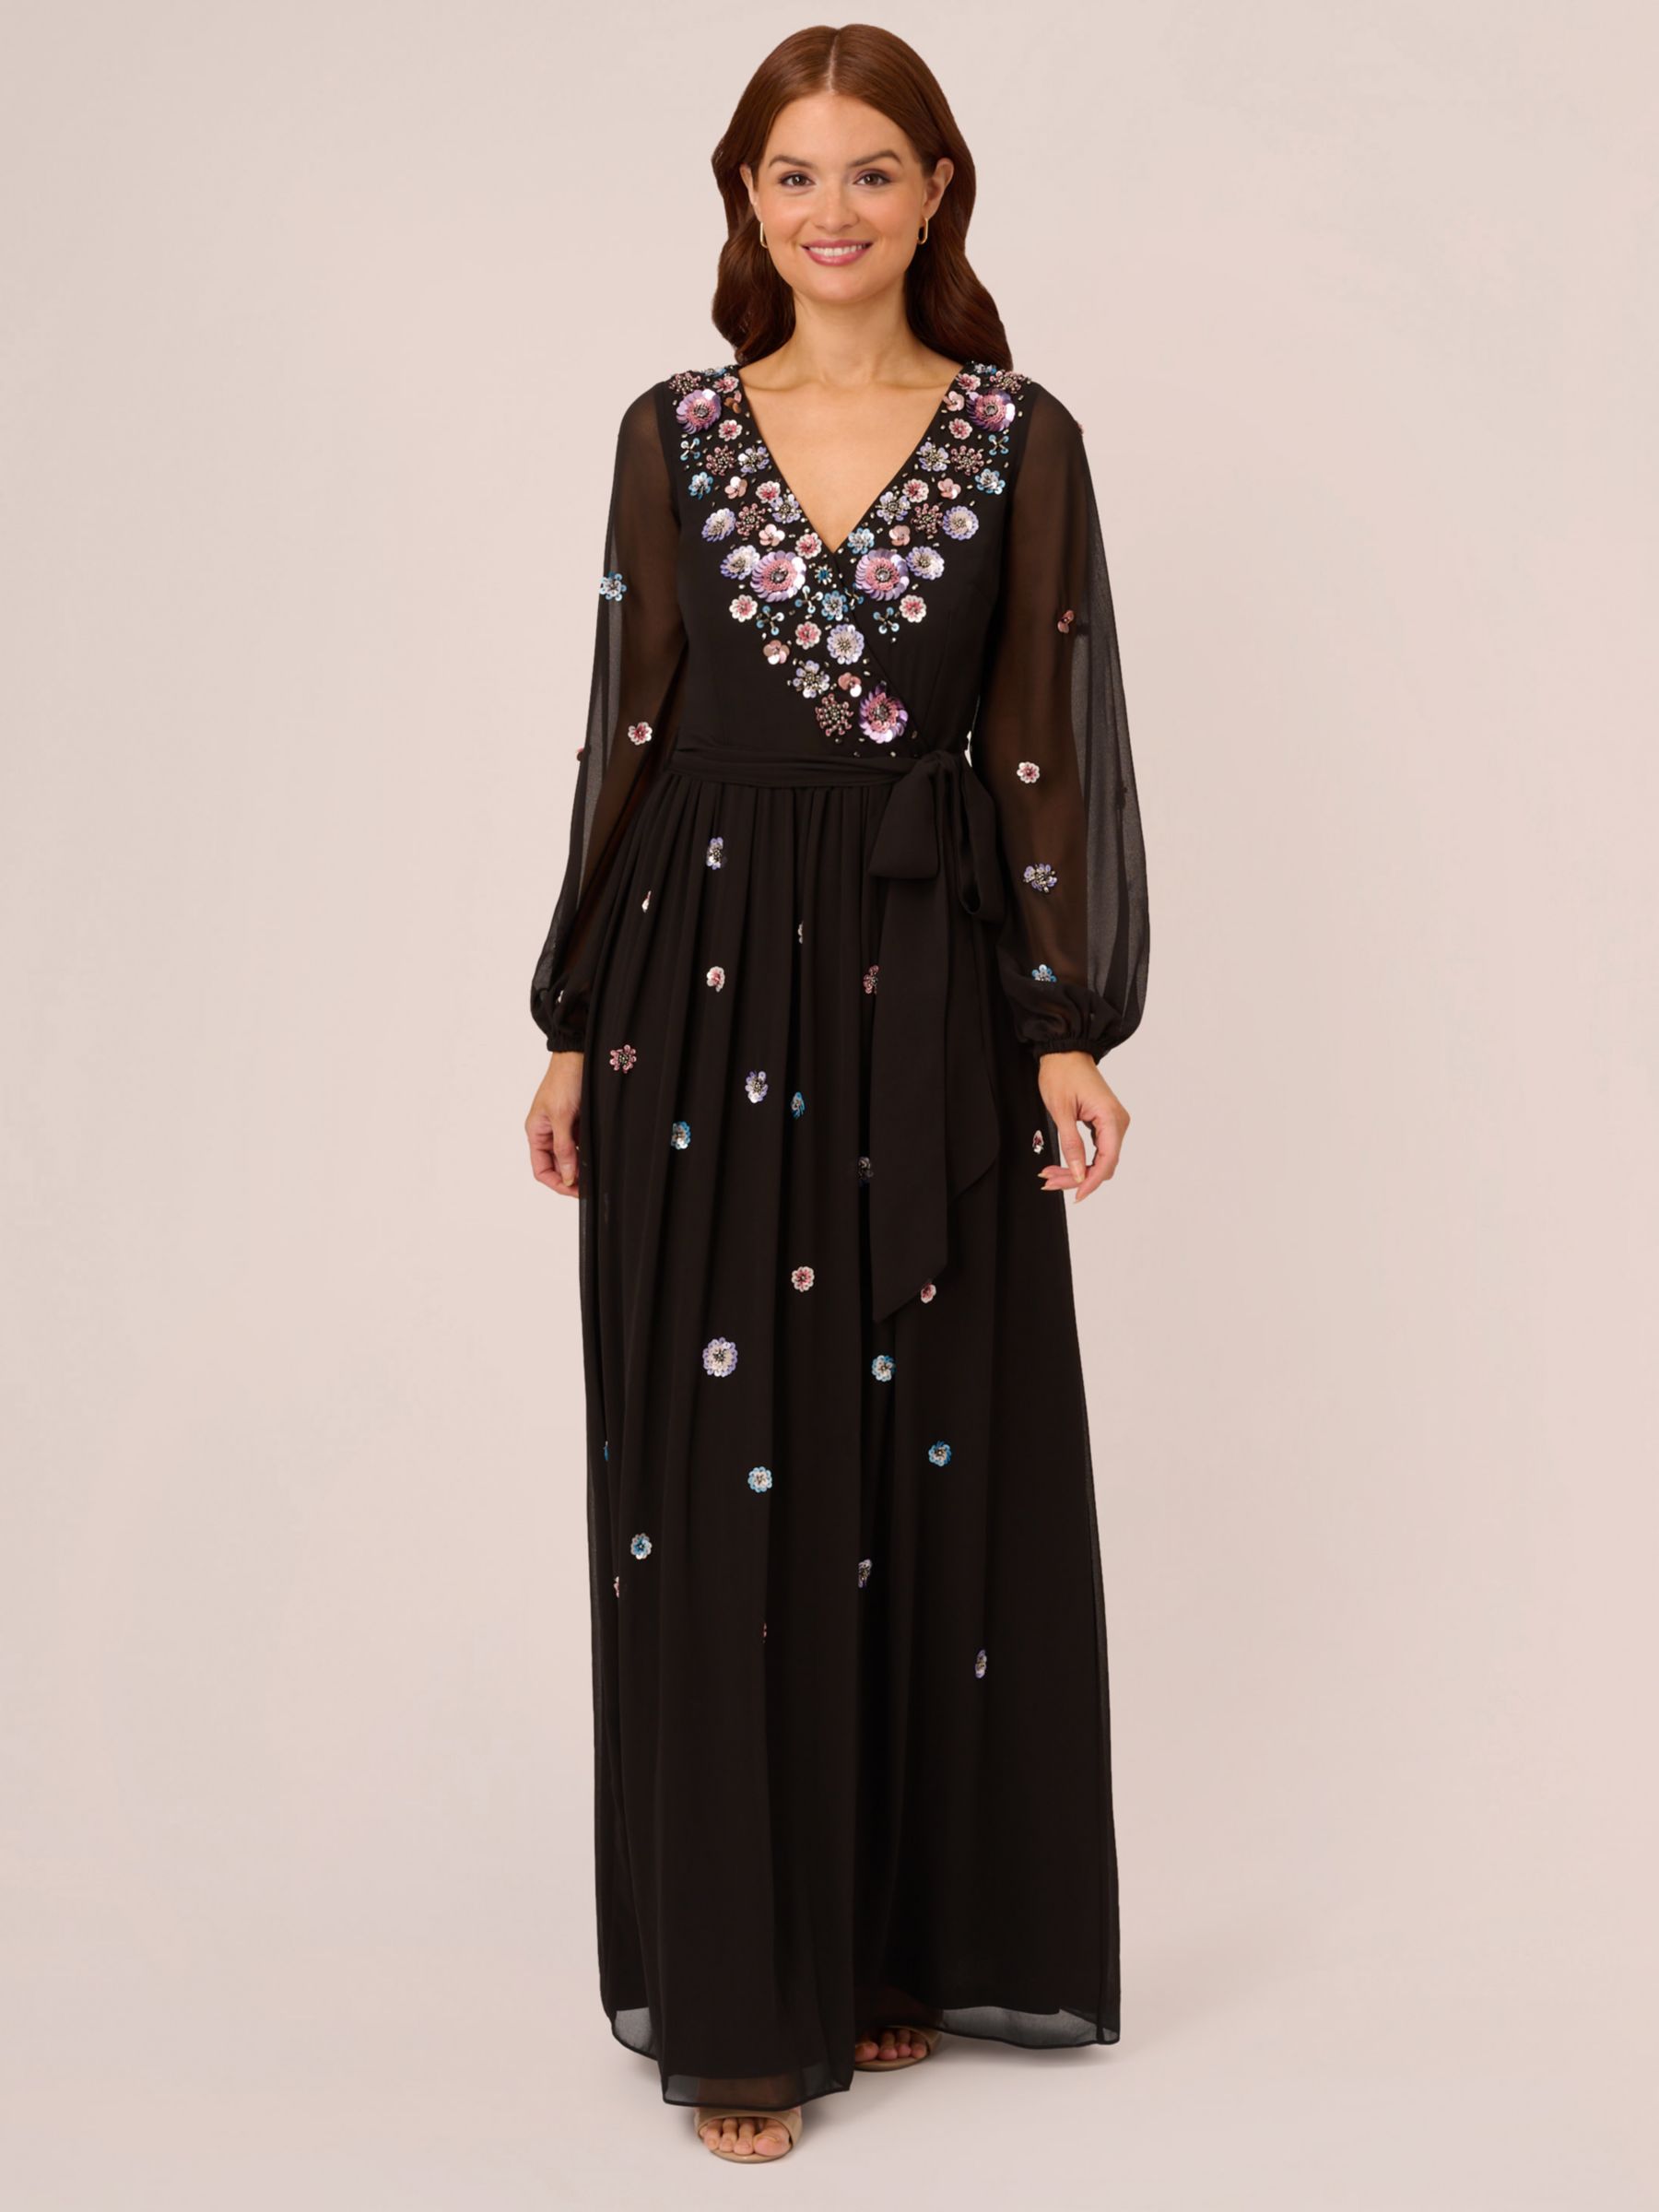 Adrianna Papell Beaded Long Sleeve Maxi Dress, Black/Multi